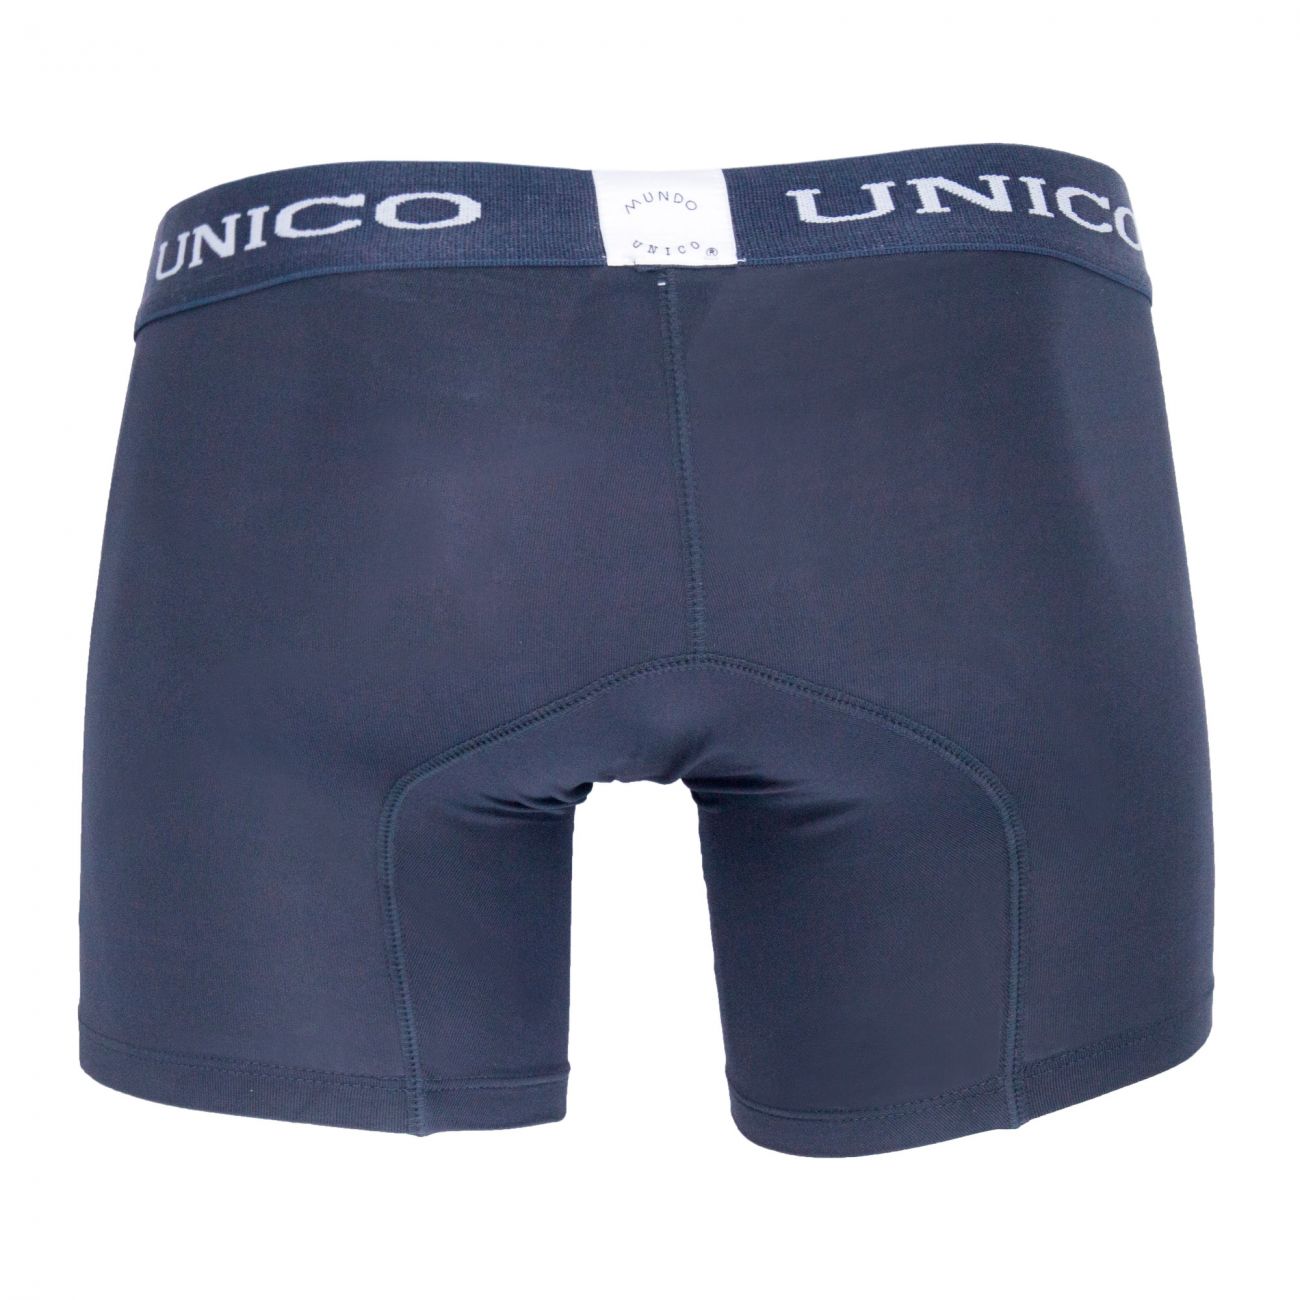 Unico (1212010020696) Boxer Briefs Asfalto Microfiber